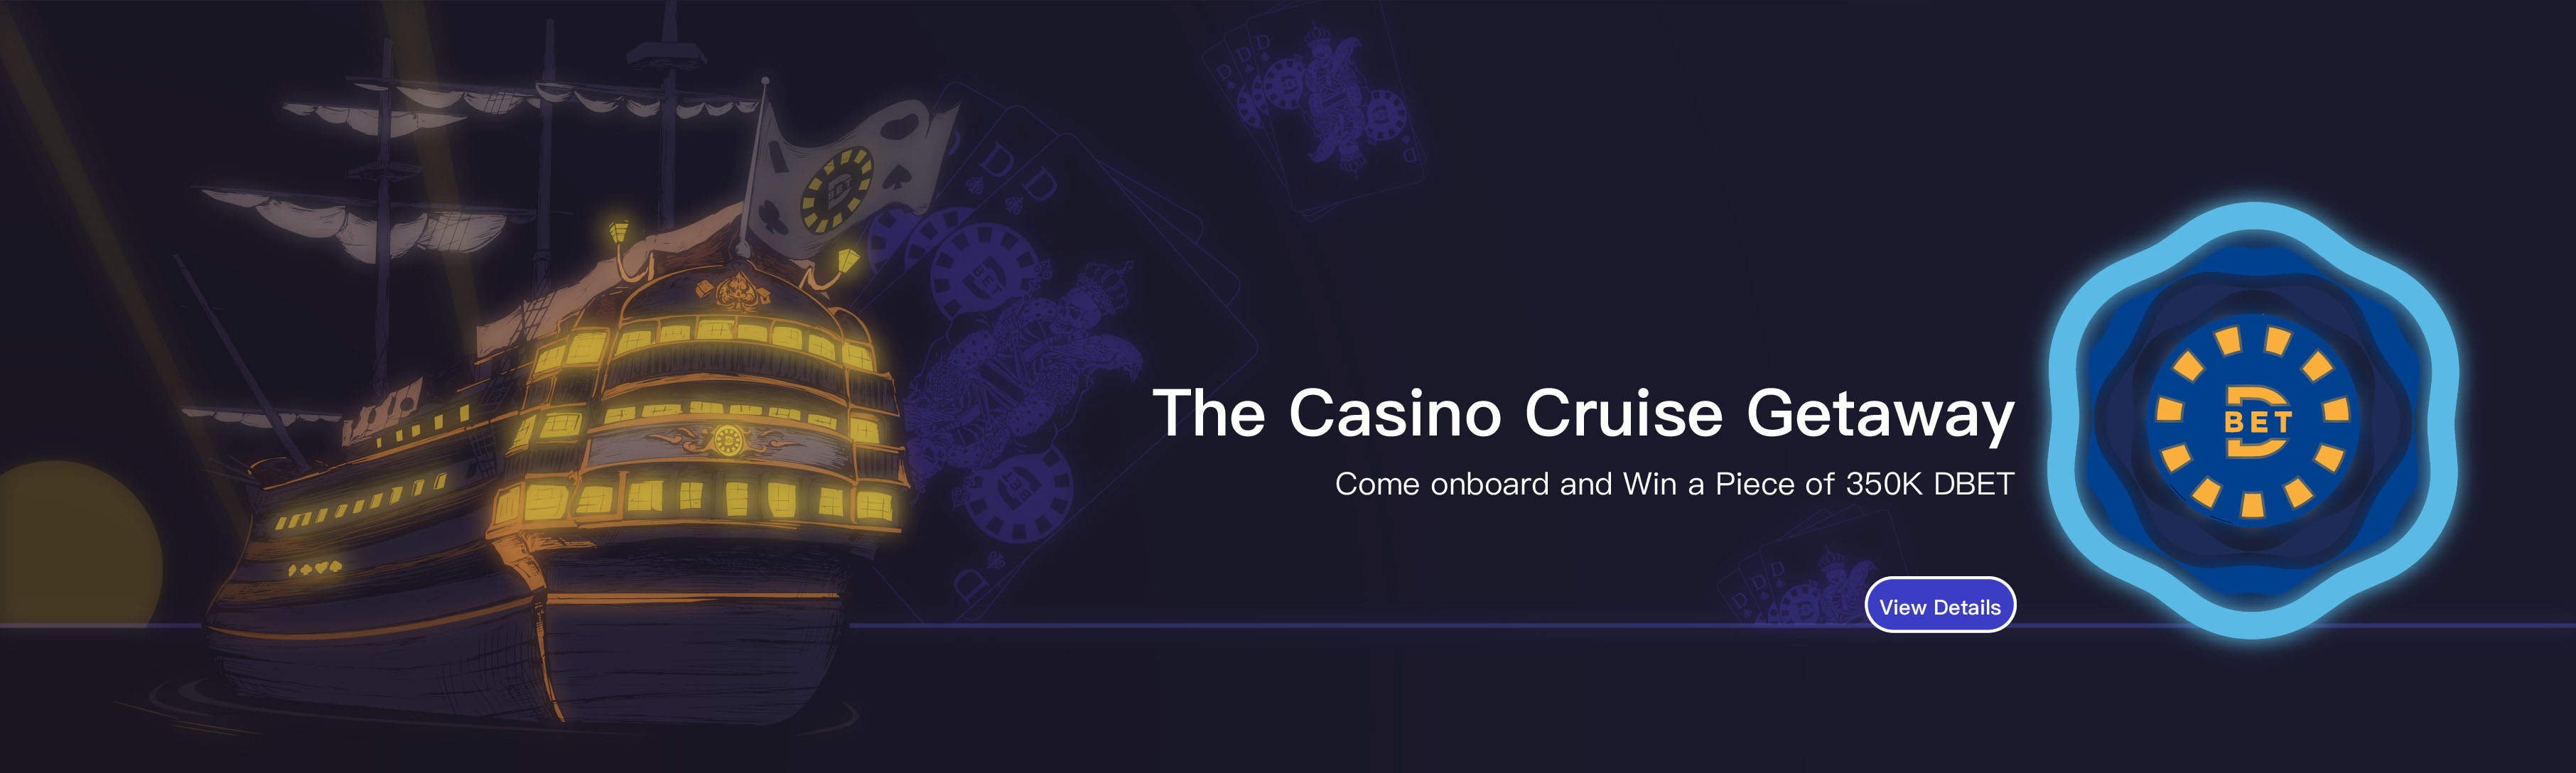 banner-casino_cruise_view_details_.jpg